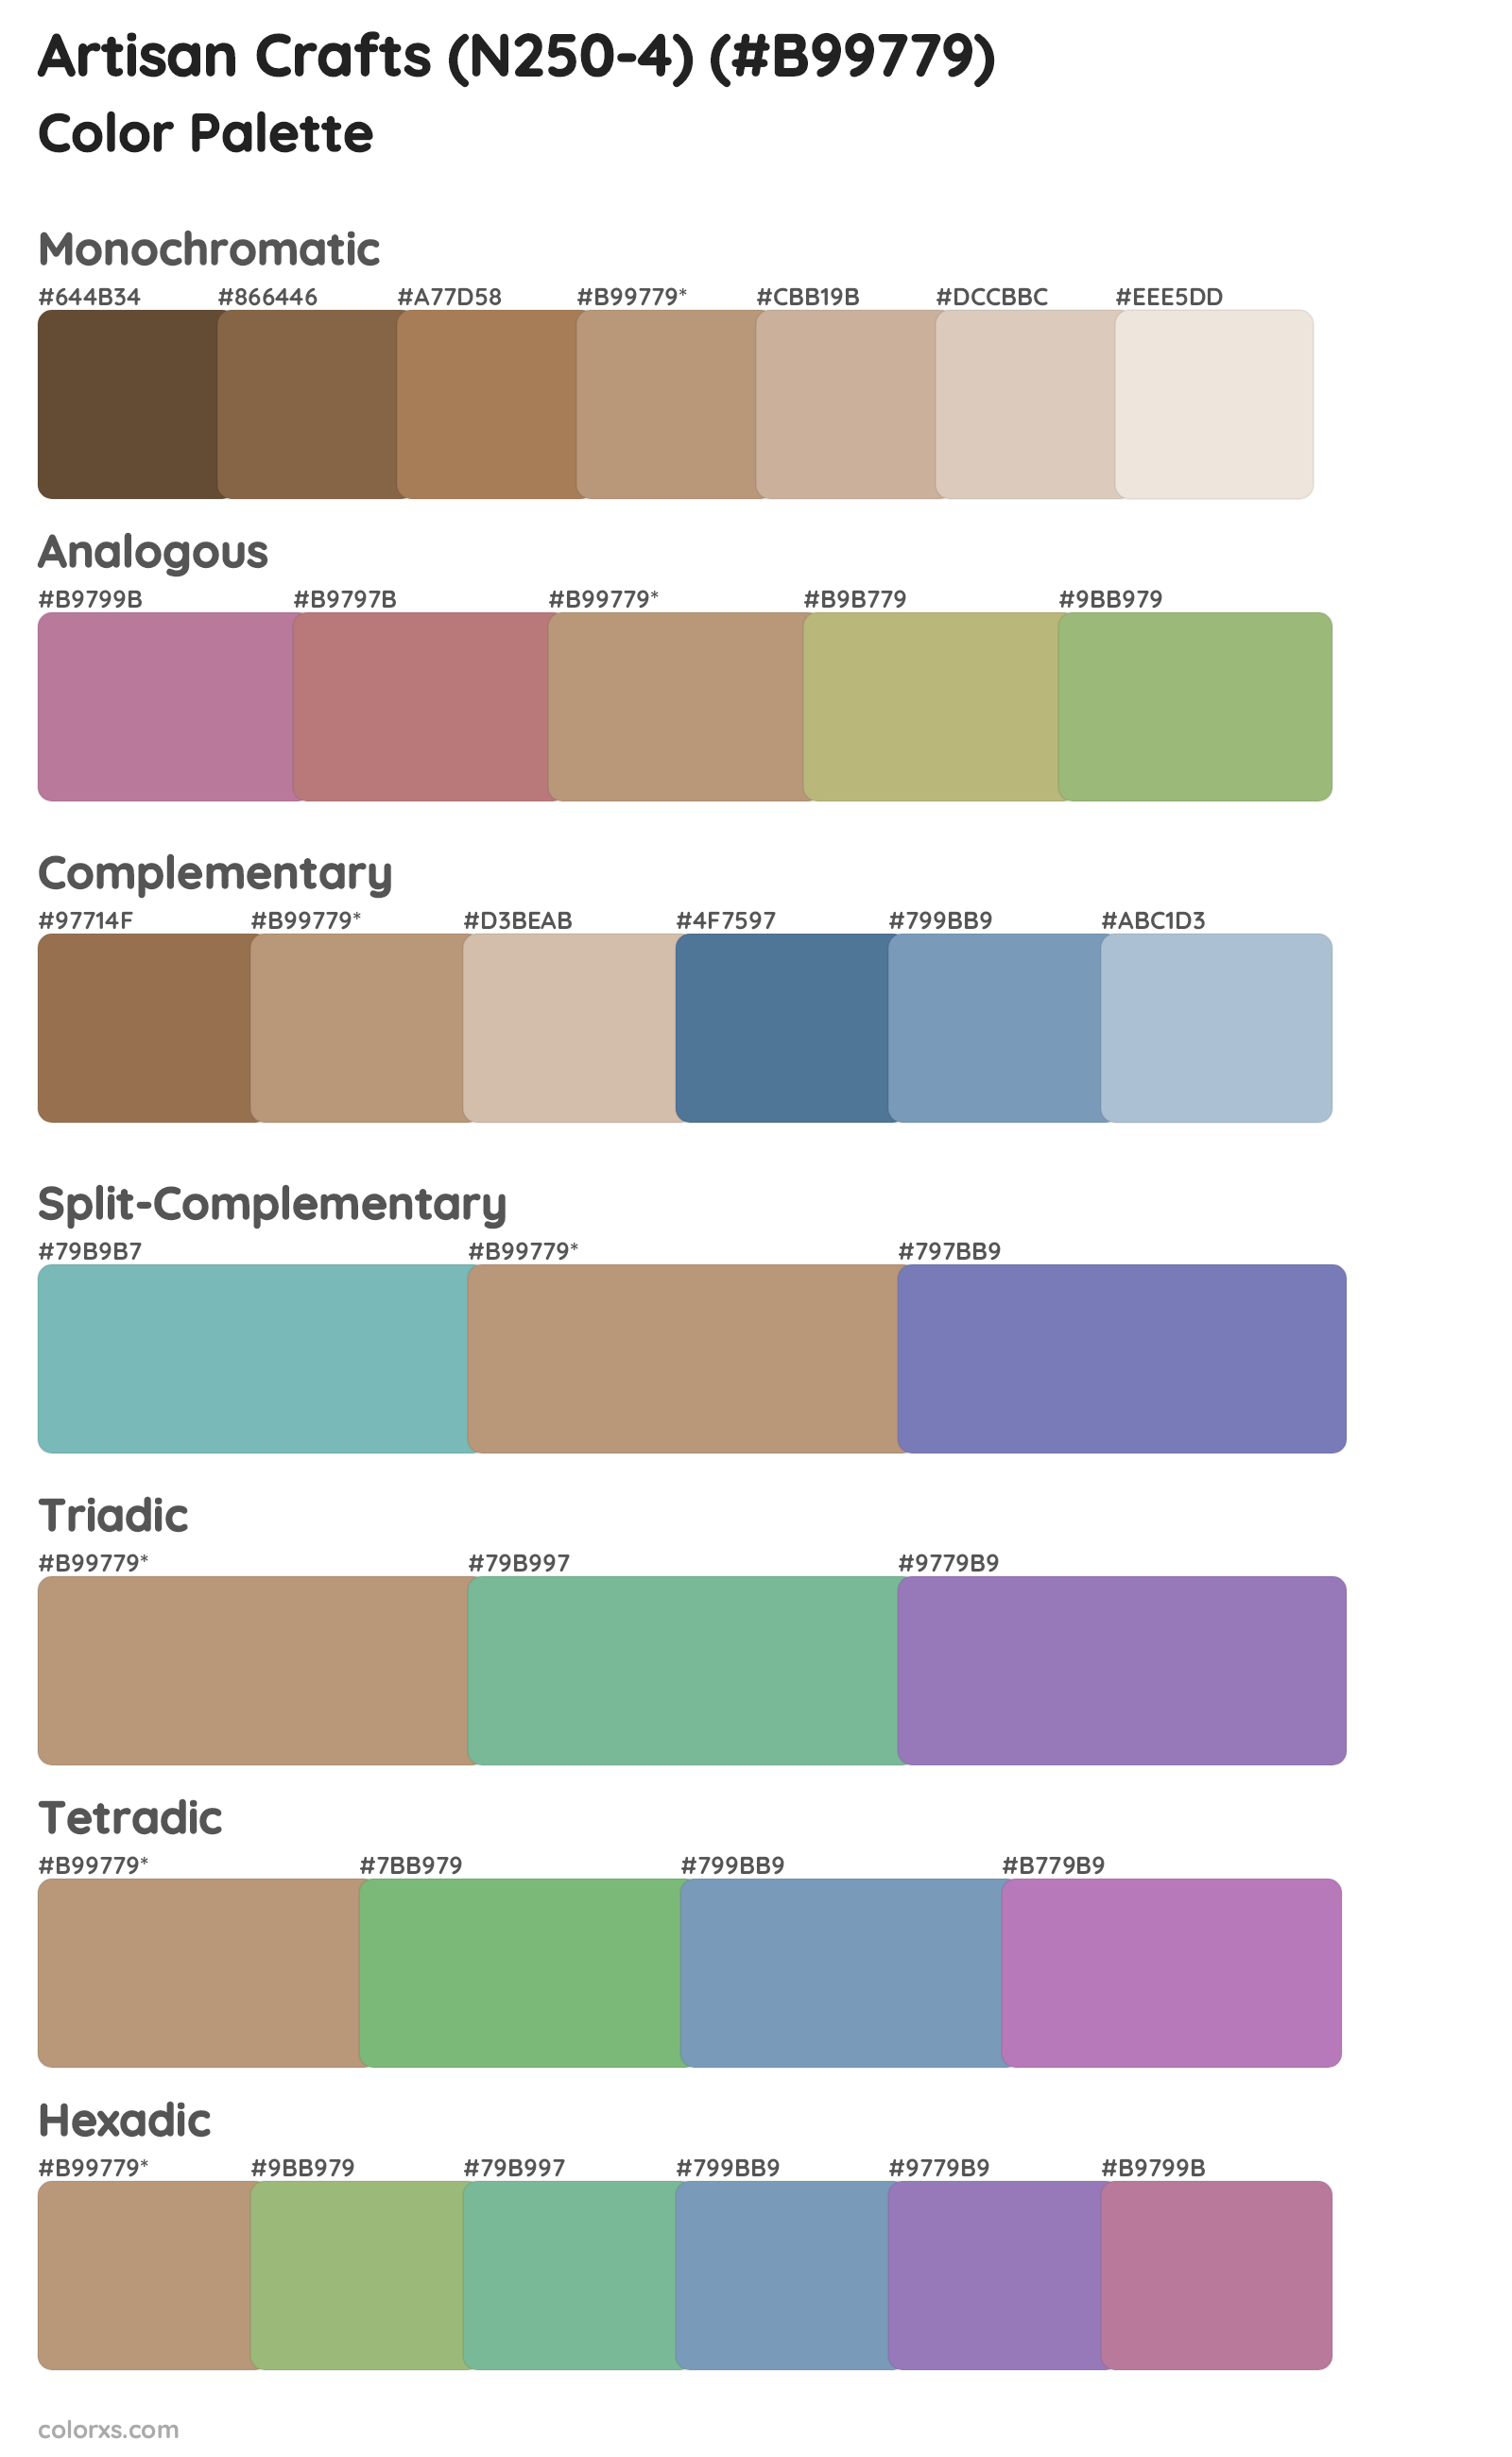 Artisan Crafts (N250-4) Color Scheme Palettes